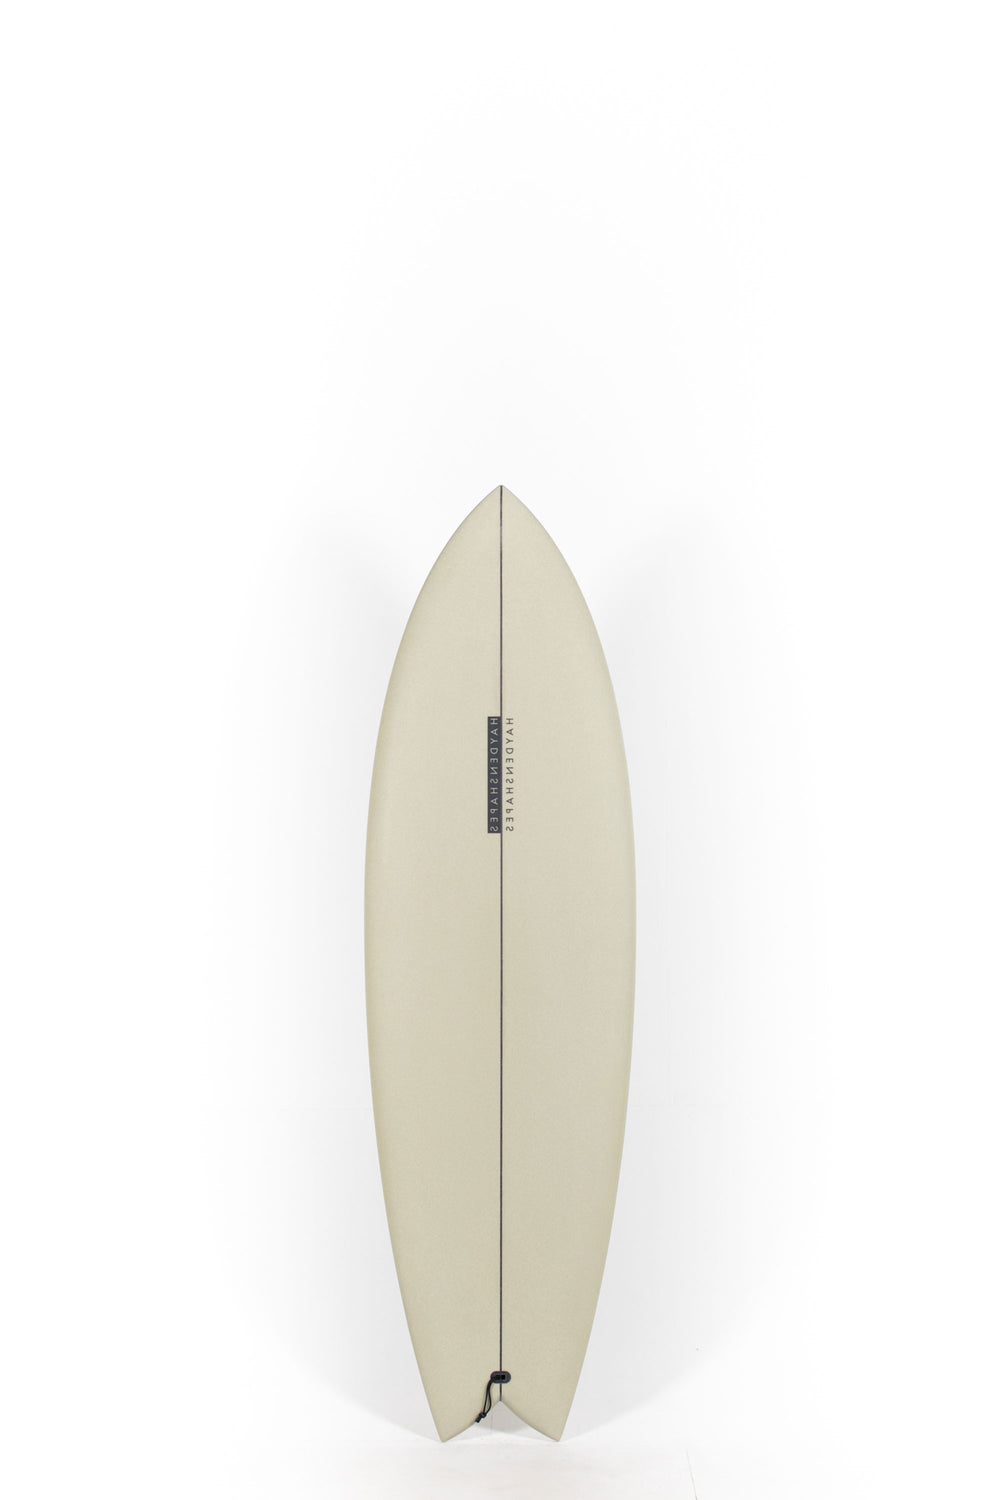 Pukas Surf Shop - HaydenShapes Surfboard - HYPTO KRYPTO TWIN PU - 6'0